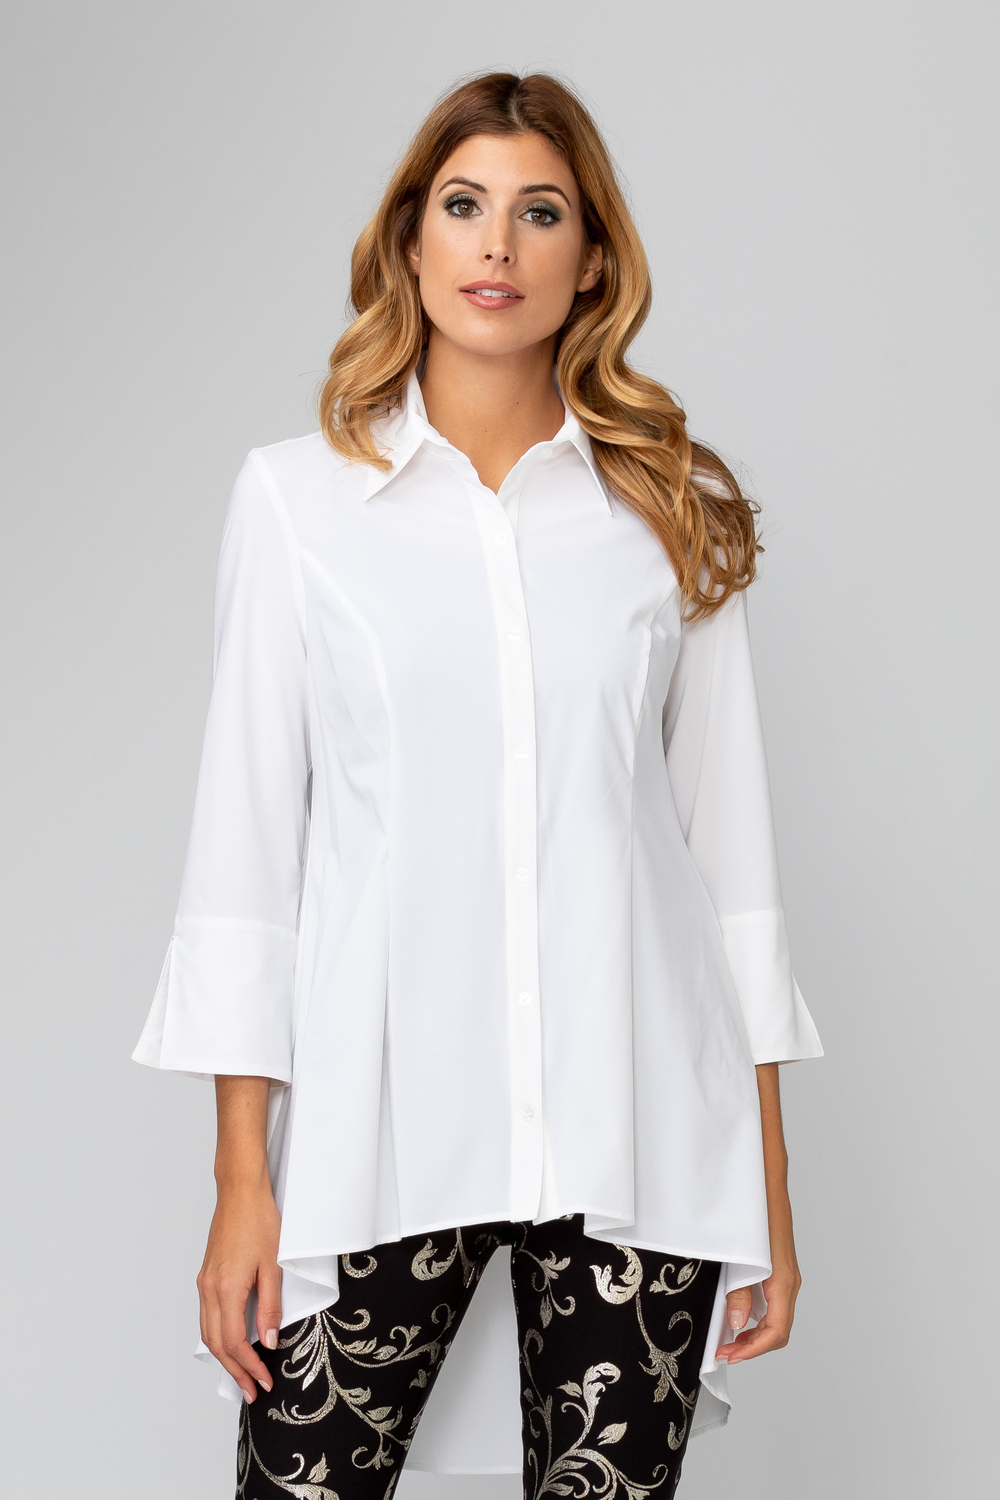 Joseph Ribkoff blouse style 193418. Blanc